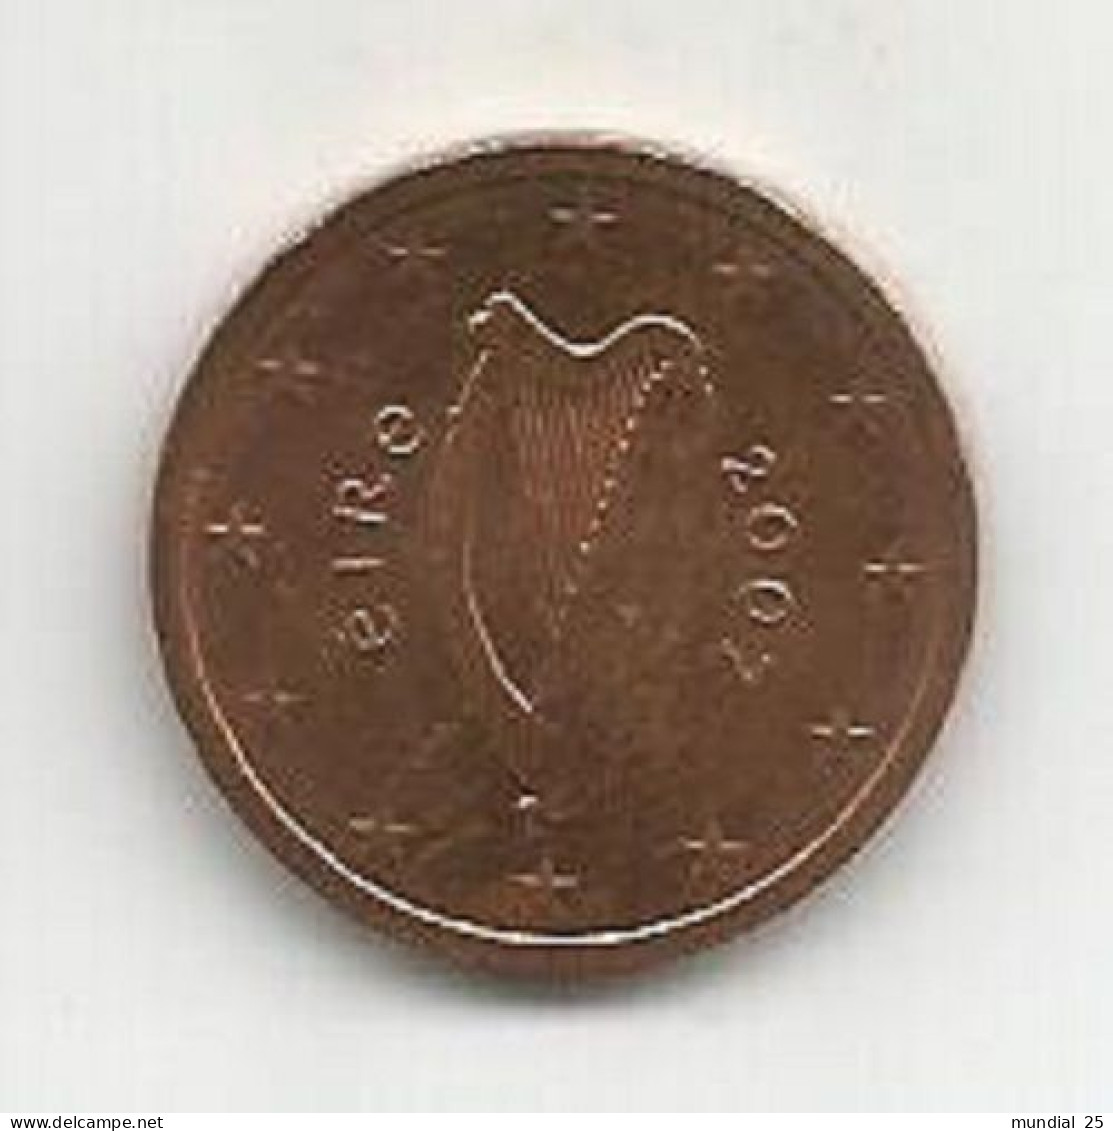 IRELAND 2 EURO CENT 2007 - Ireland